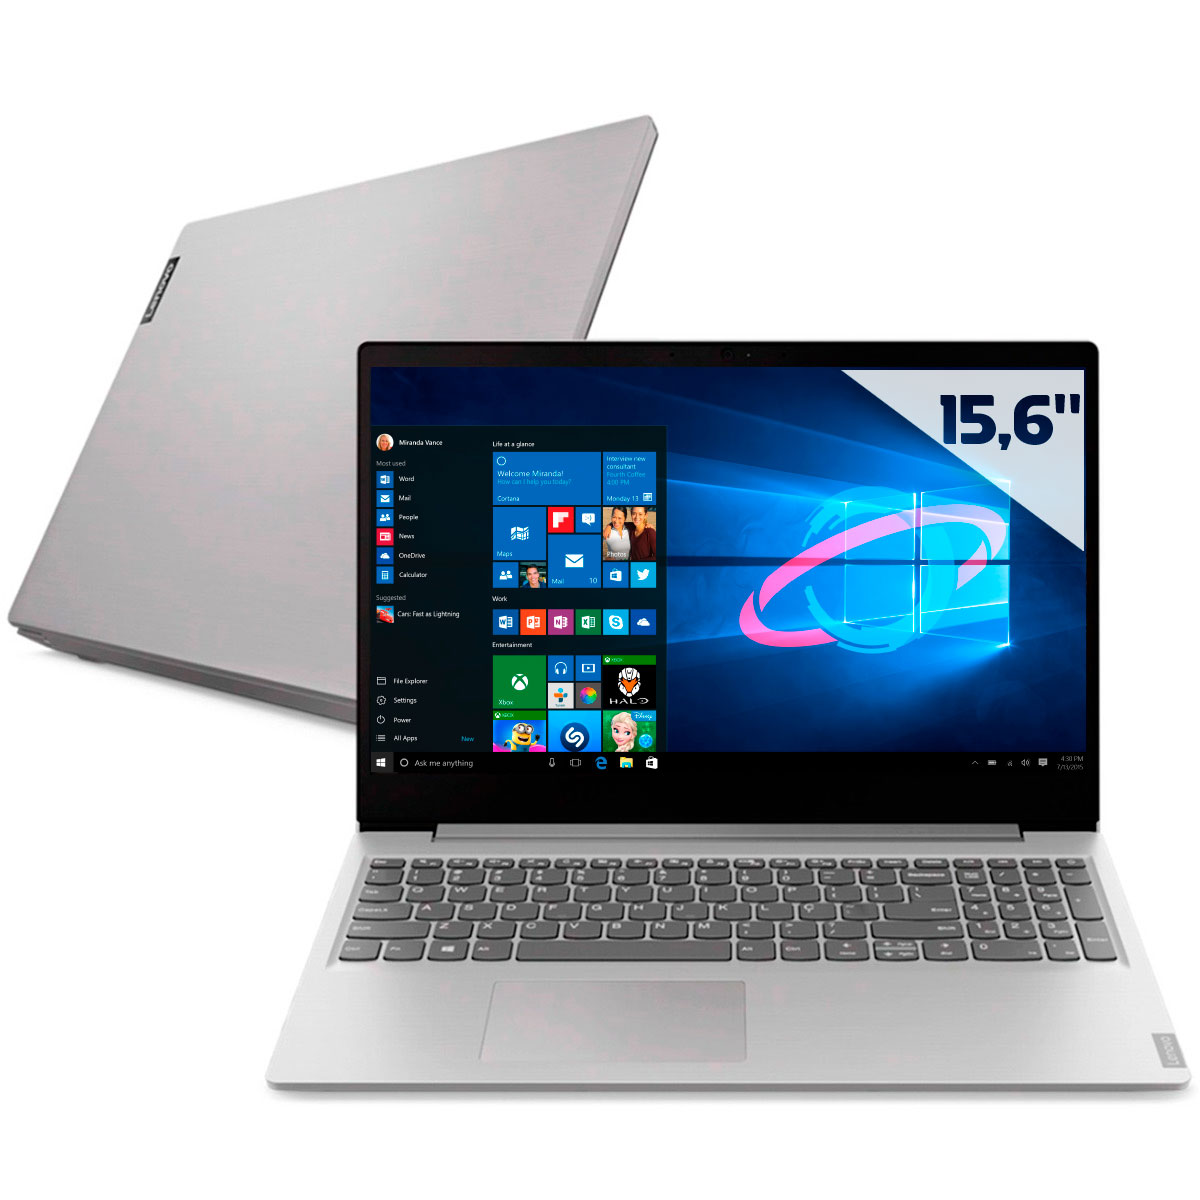 Notebook Lenovo Ideapad S145 - Intel i7 1065G7, 12GB, SSD 256GB, Tela 15.6